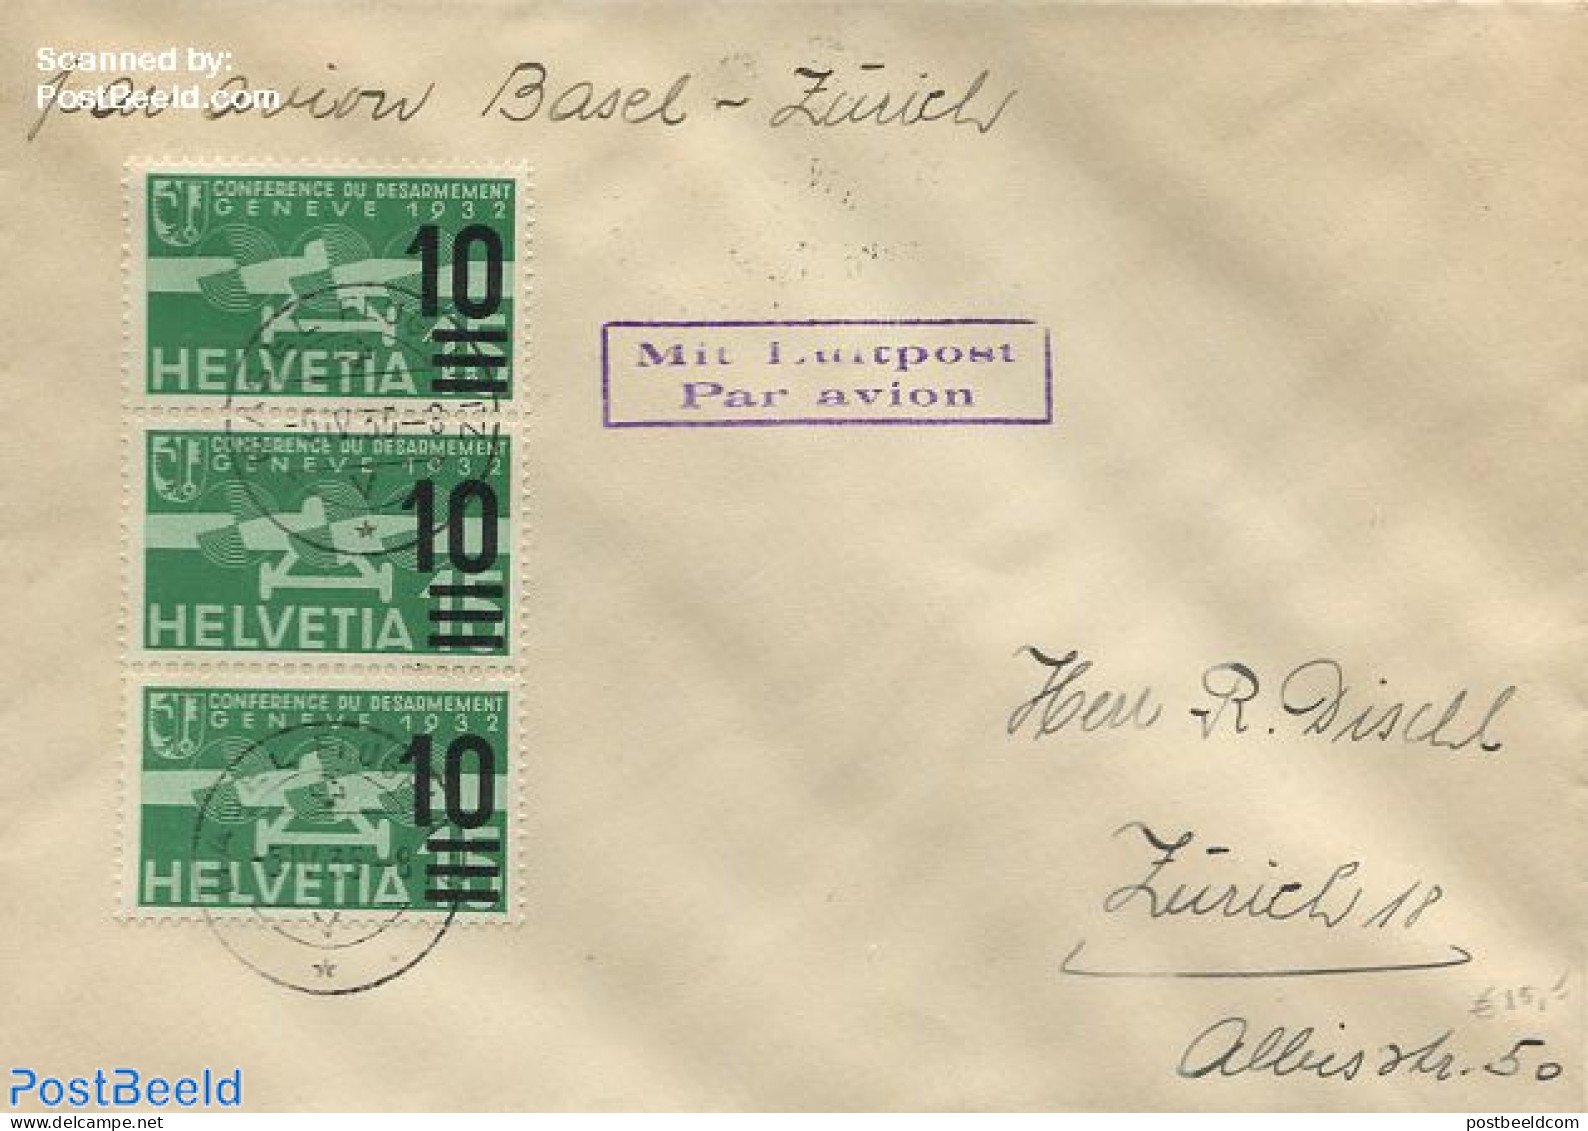 Switzerland 1935 Airmail From Basel To Zurich, Postal History - Briefe U. Dokumente